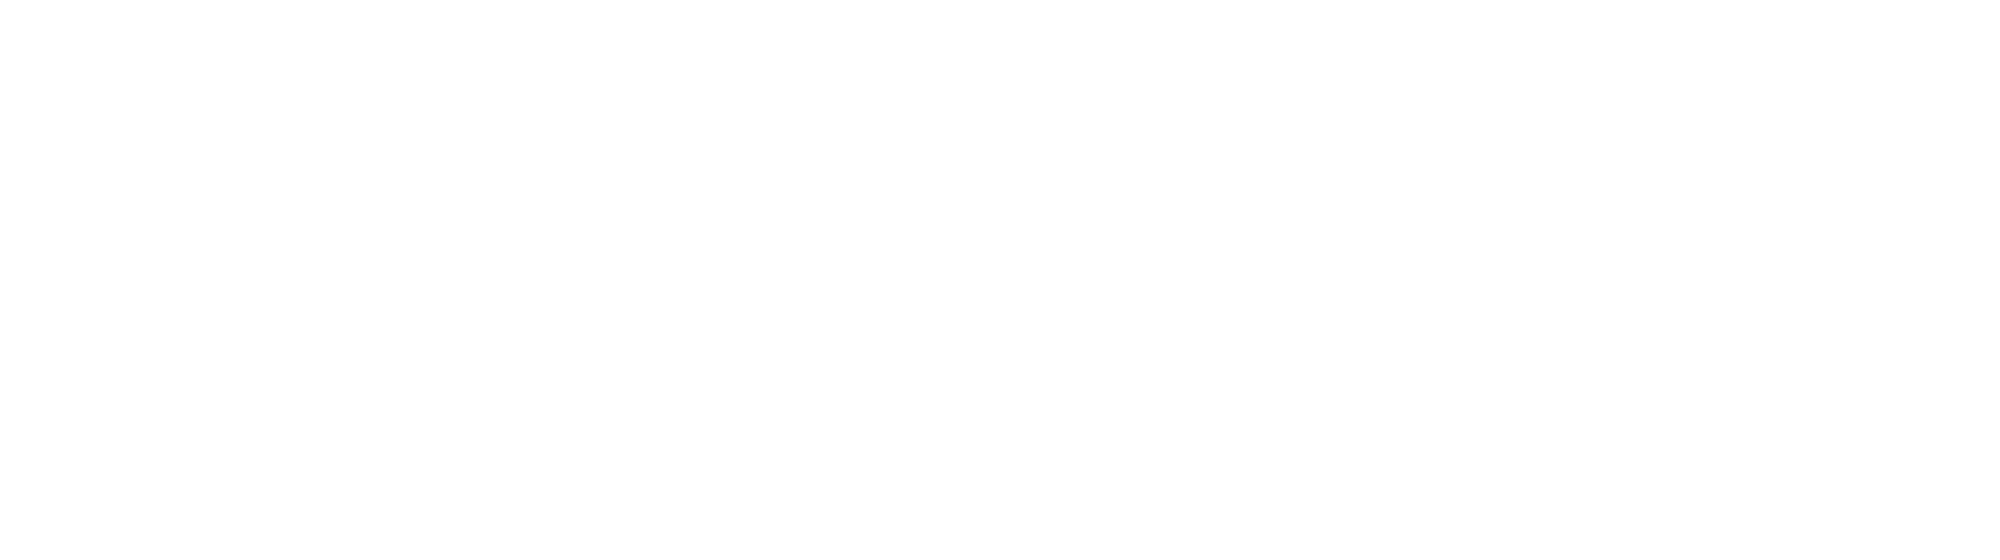 SMS CONCEPT